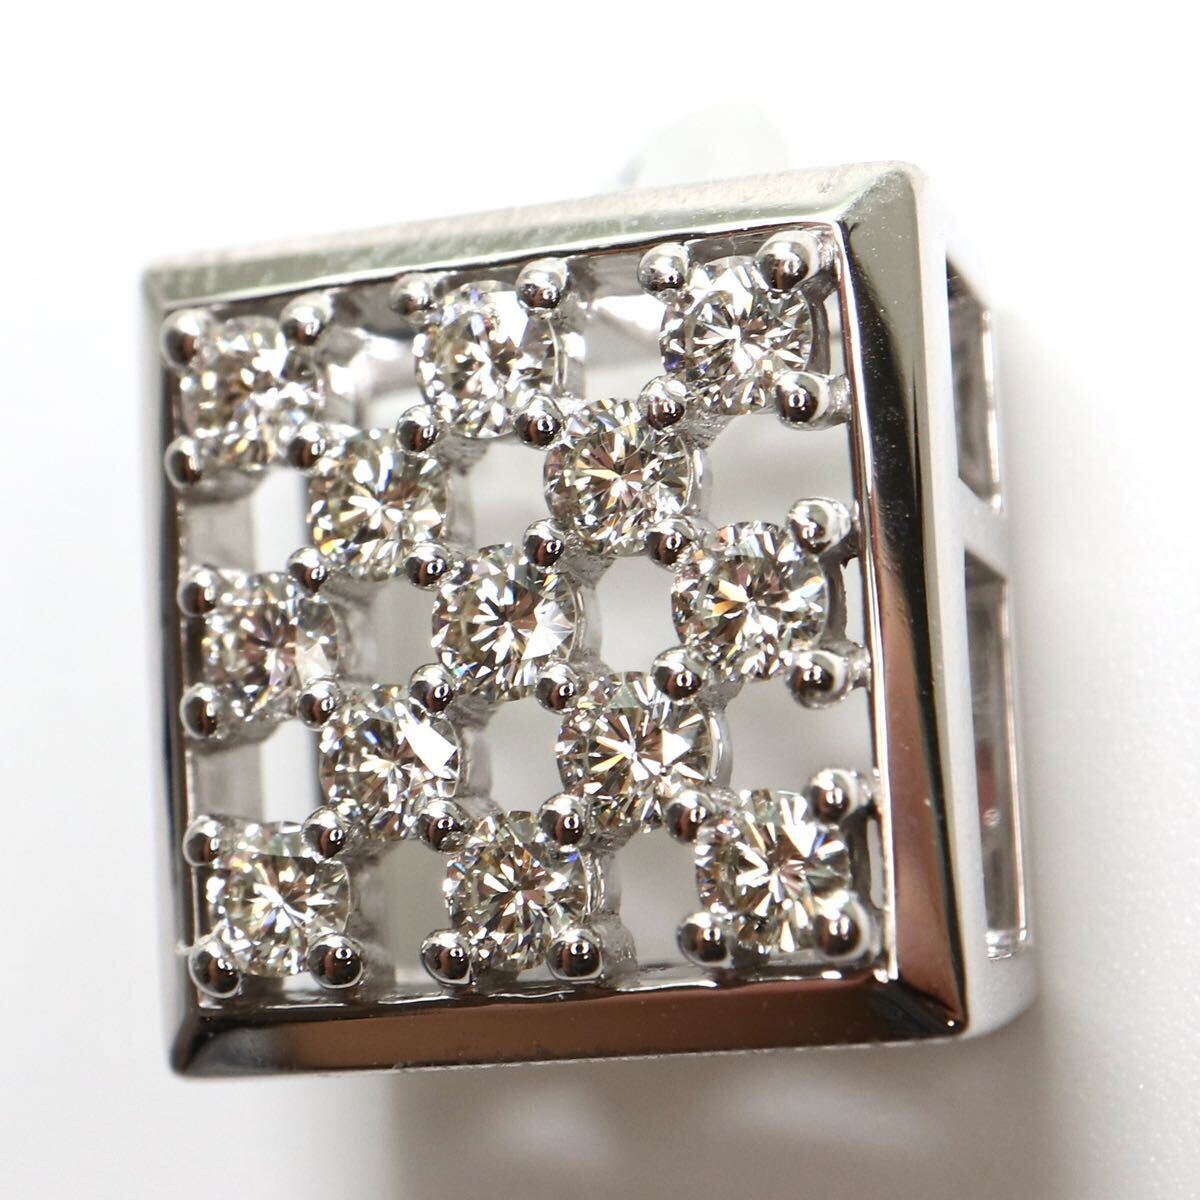 POLA Jewelry(ポーラジュエリー)《K18WG天然ダイヤモンドペンダントトップ》A 2.9g 0.42ct diamond pendant jewelry ジュエリー ED0/ED5の画像2